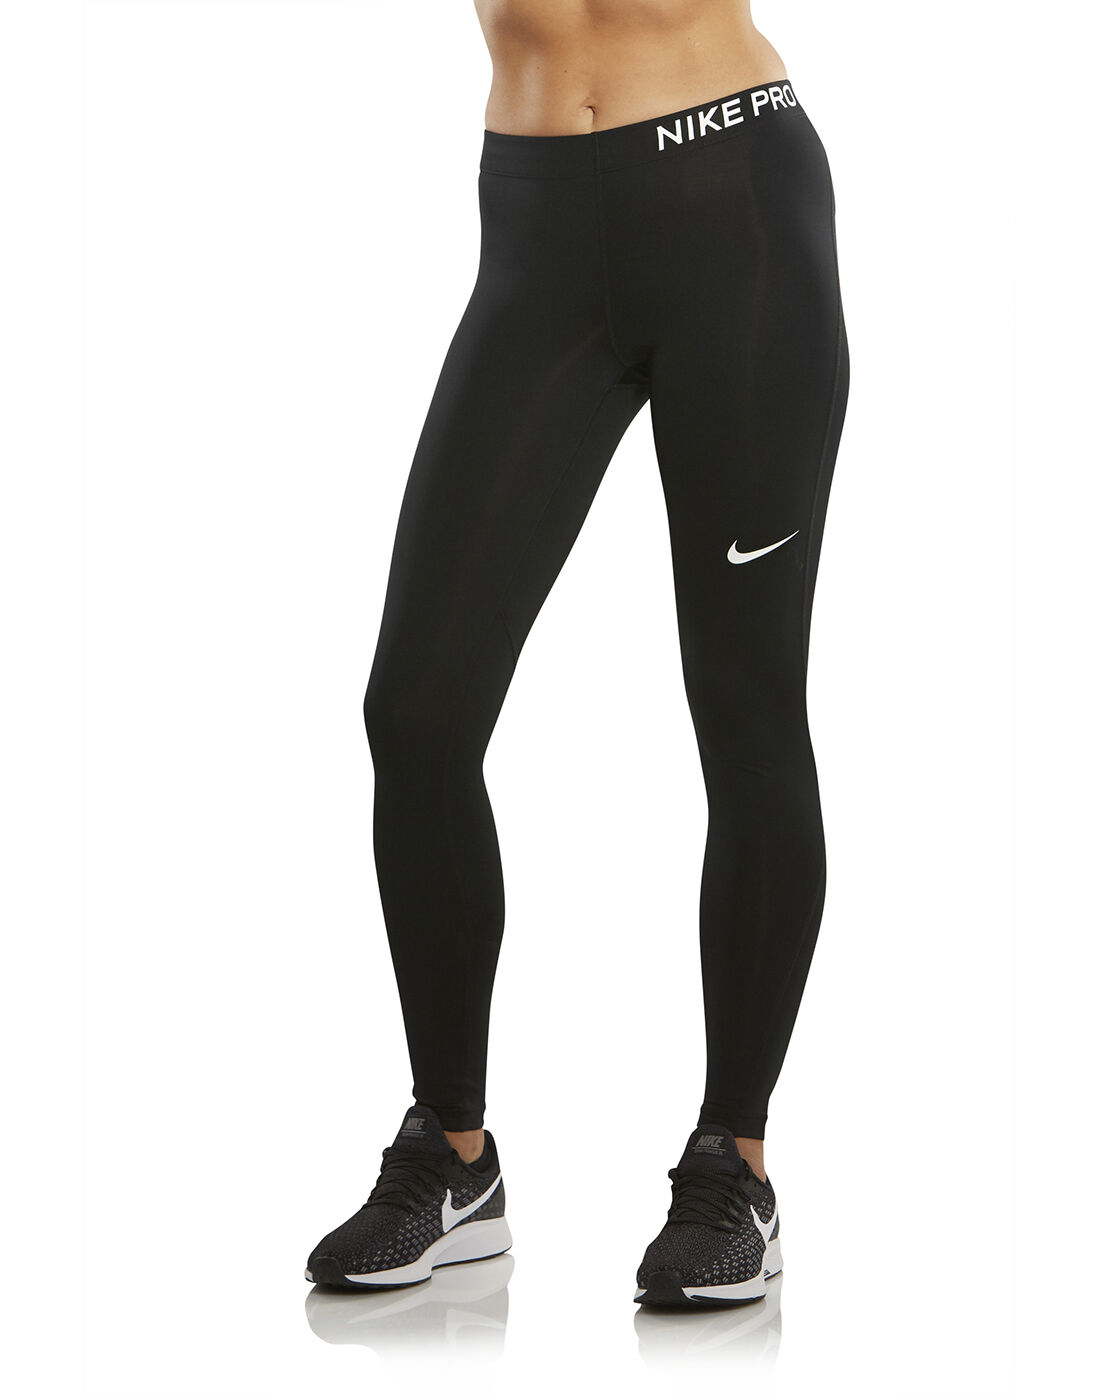 Women's Nike Pro Training Tights 